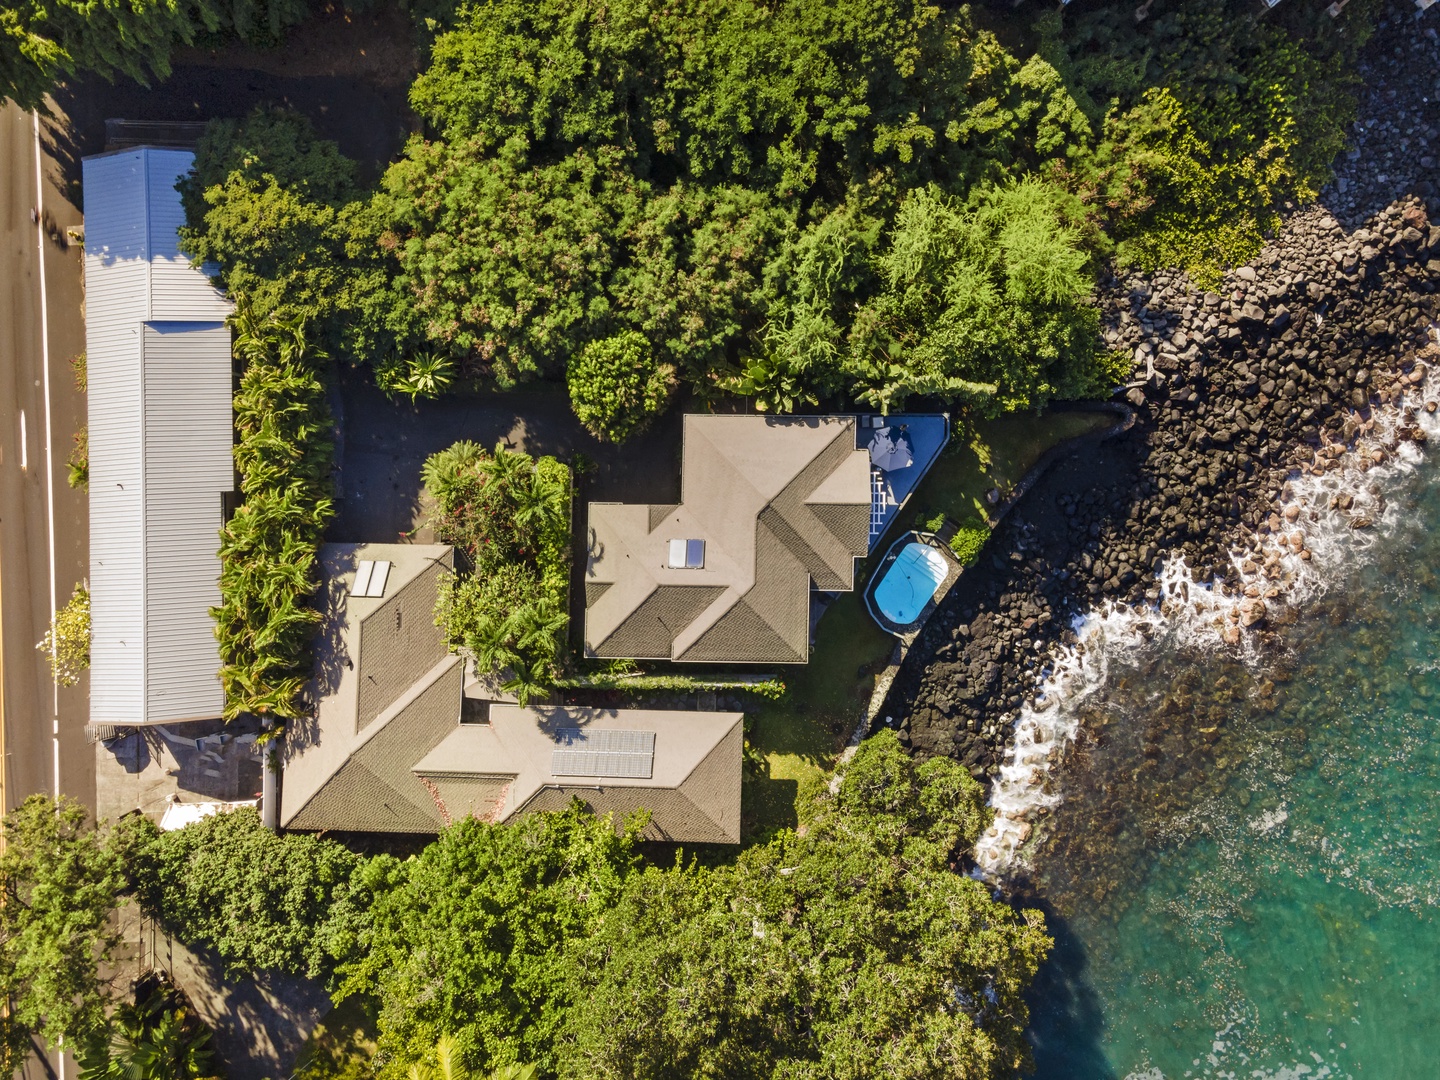 Kailua-Kona Vacation Rentals, Hale Kope Kai - Aerial view of the home and neighboring property